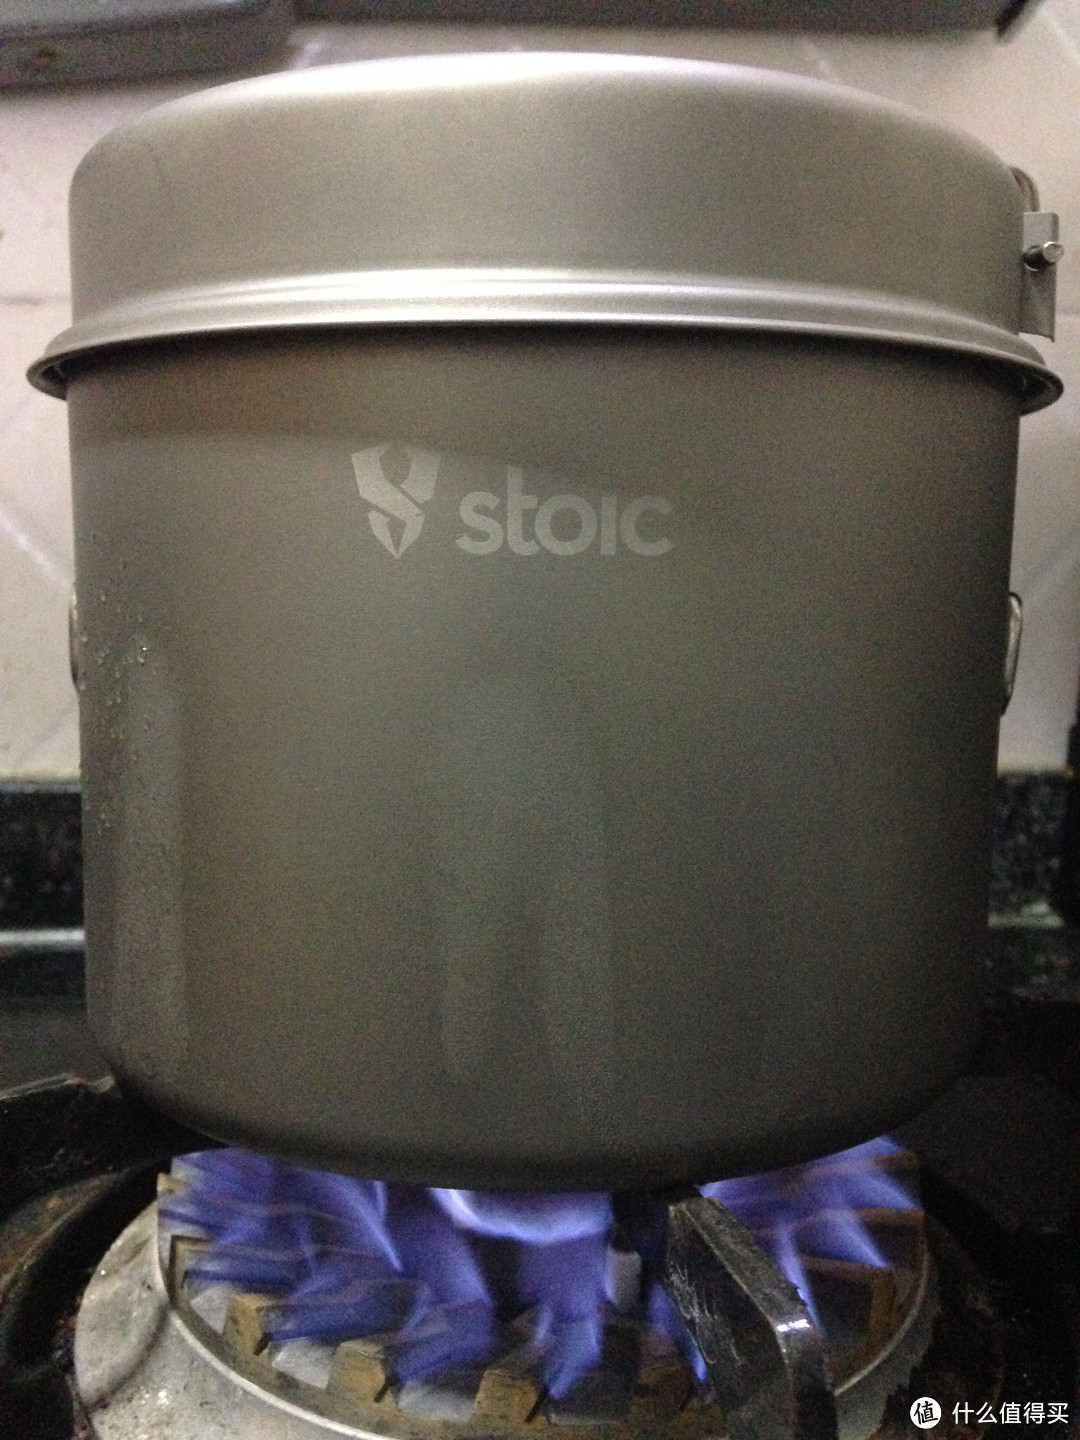 STOIC Ti 1.6L Pot + Fry Pan Set 户外钛锅